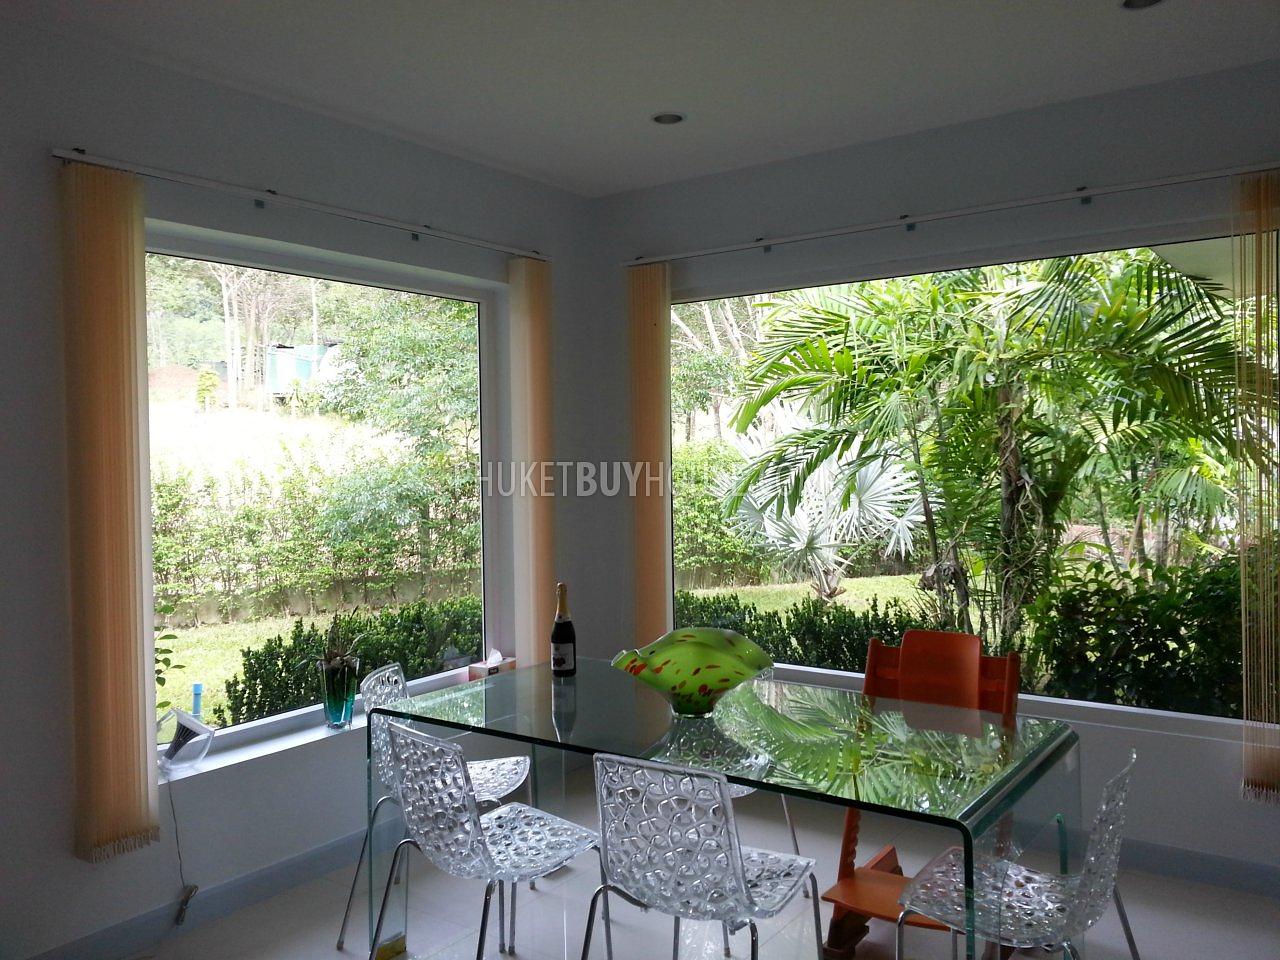 EAS3910: Hot! 4-bedroom modern pool villa on a 1 rai land plot near PIADS (UWC). Urgent sale!. Photo #15